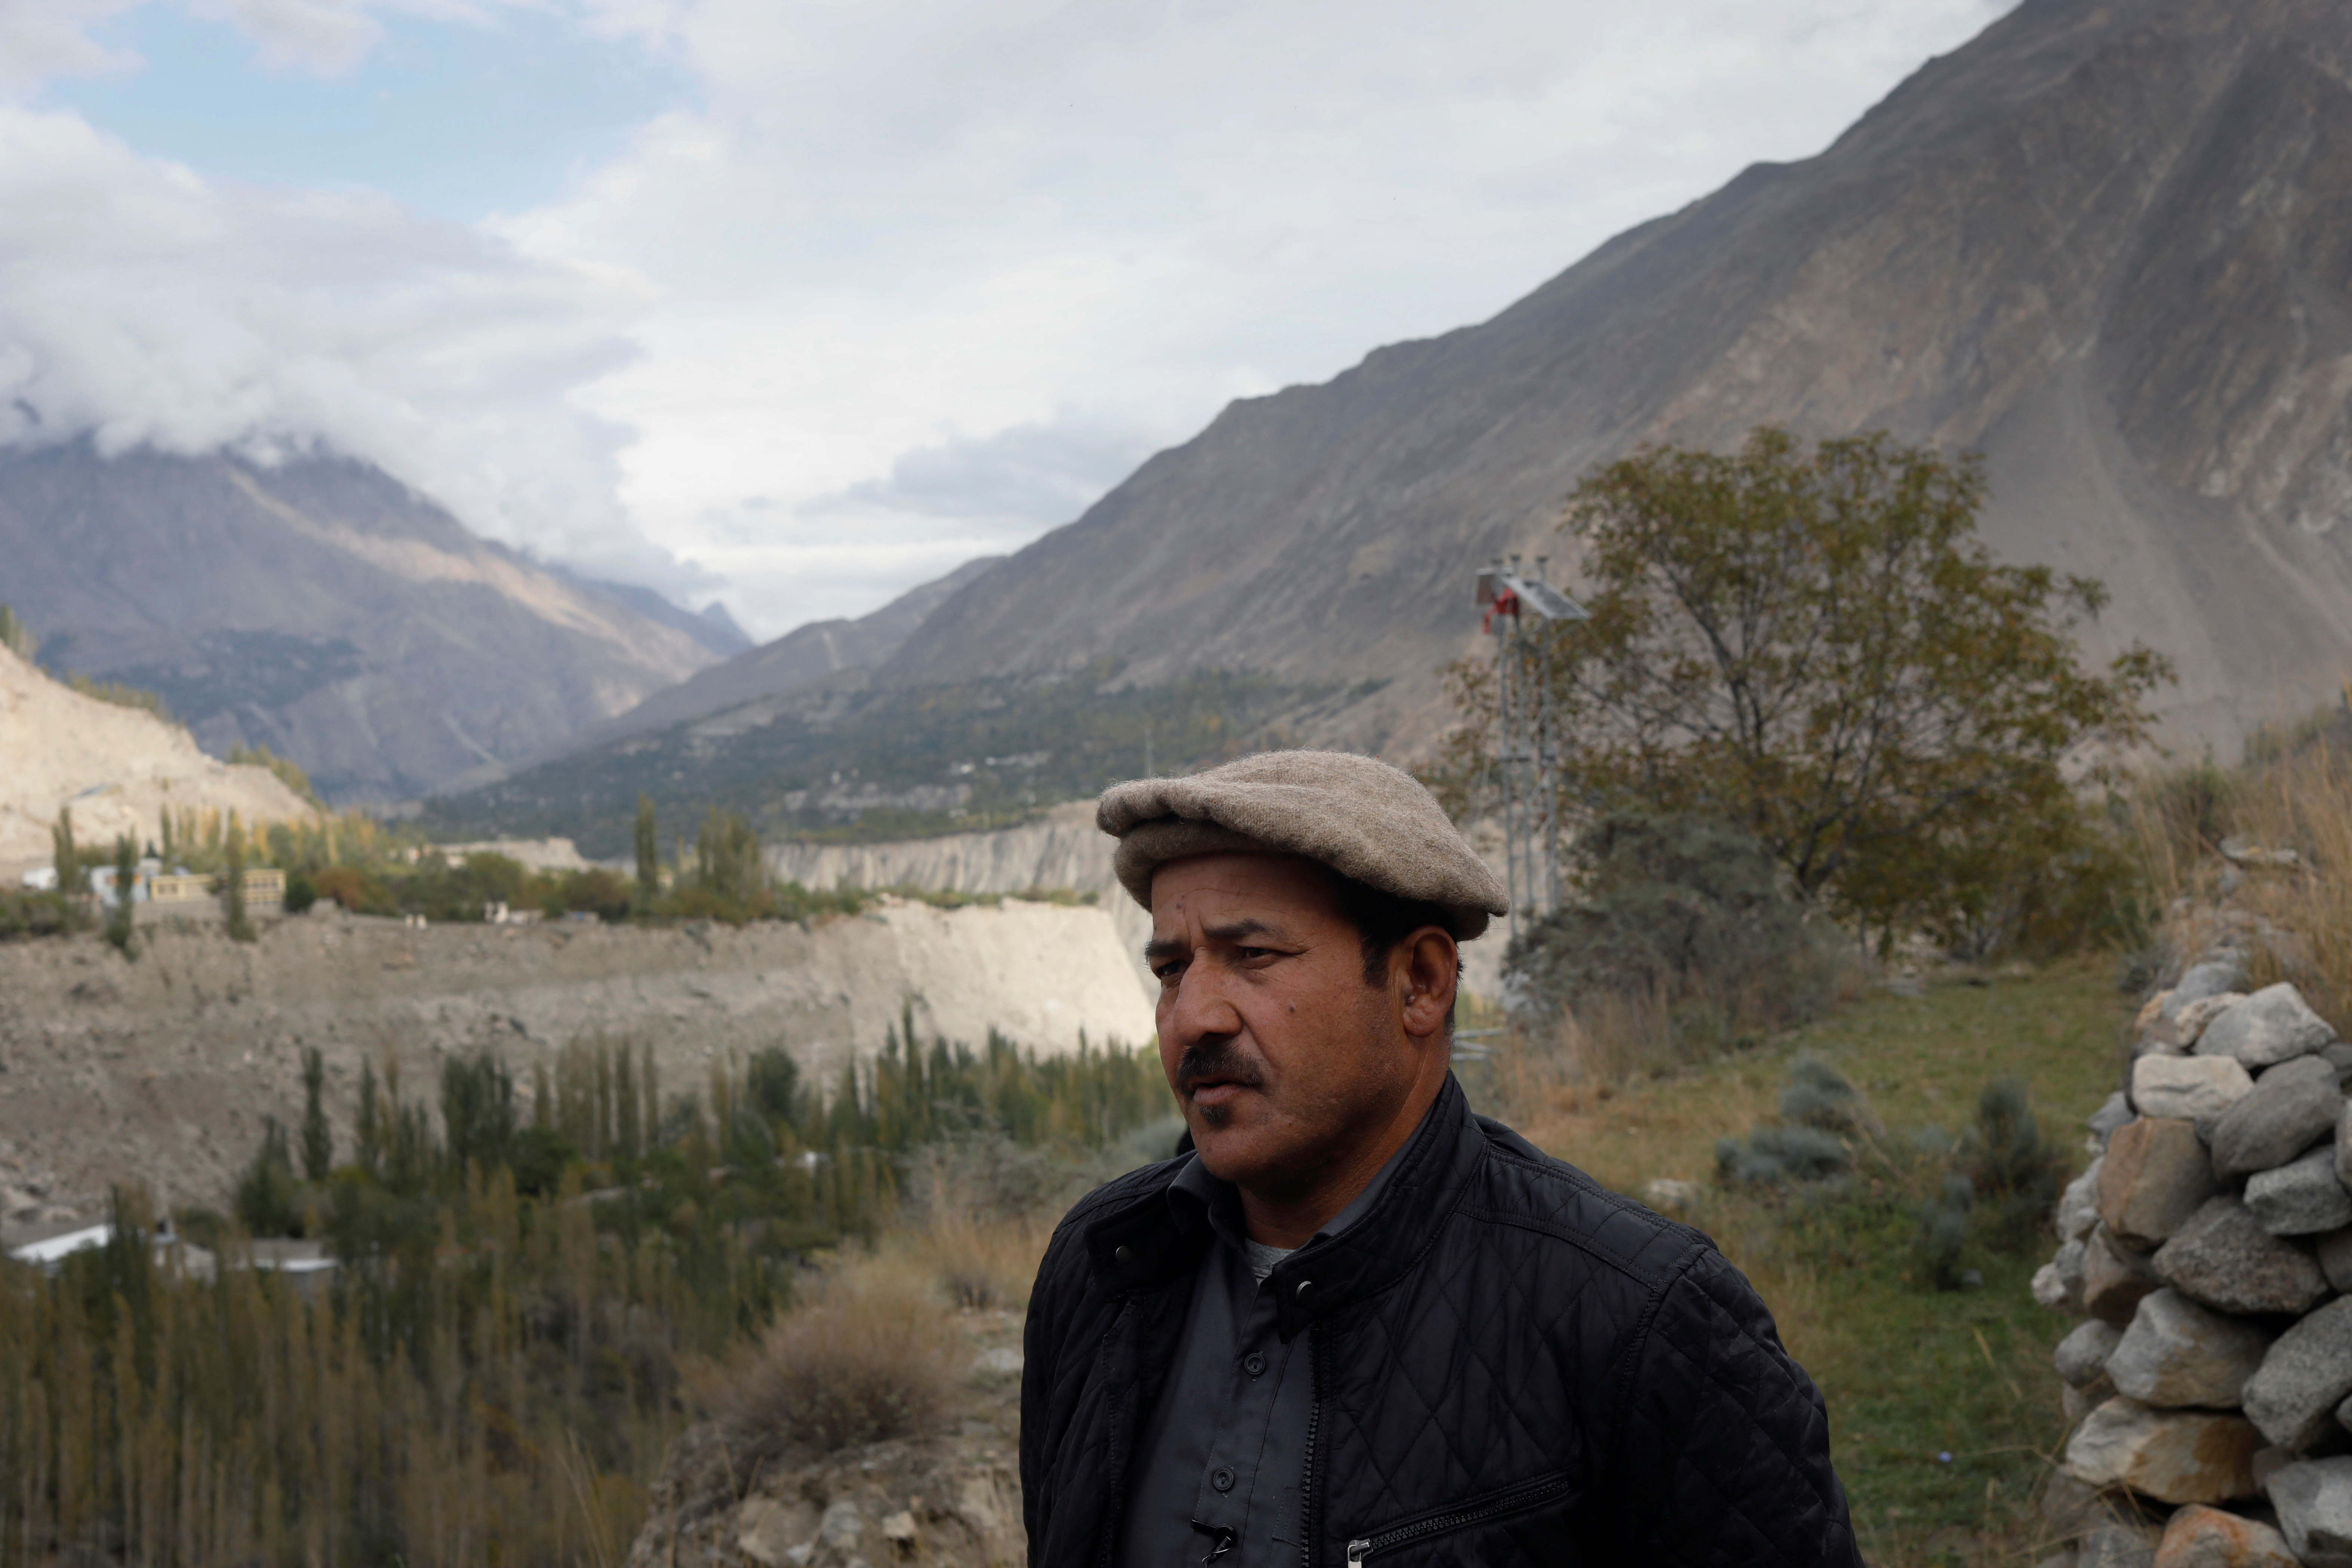 Tariq Jamil, 51, chairman of the Community Based Disaster Risk Management Centre, in Hassanabad village, Hunza valley, in the Karakoram mountain range in the Gilgit-Baltistan region of Pakistan.